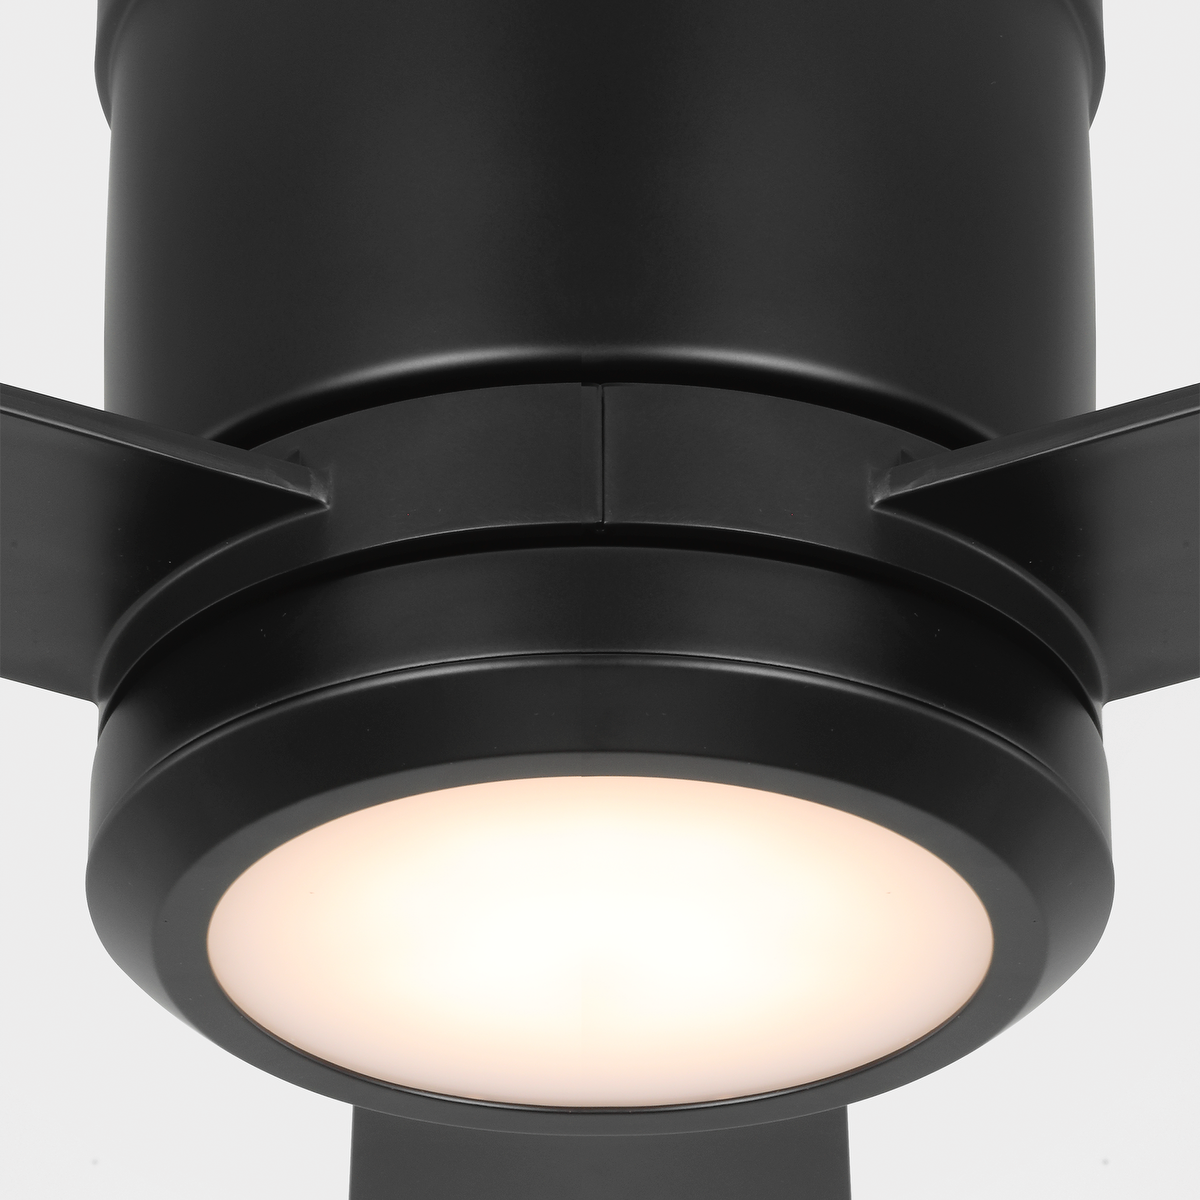 Clarity 52" Hugger LED Ceiling Fan